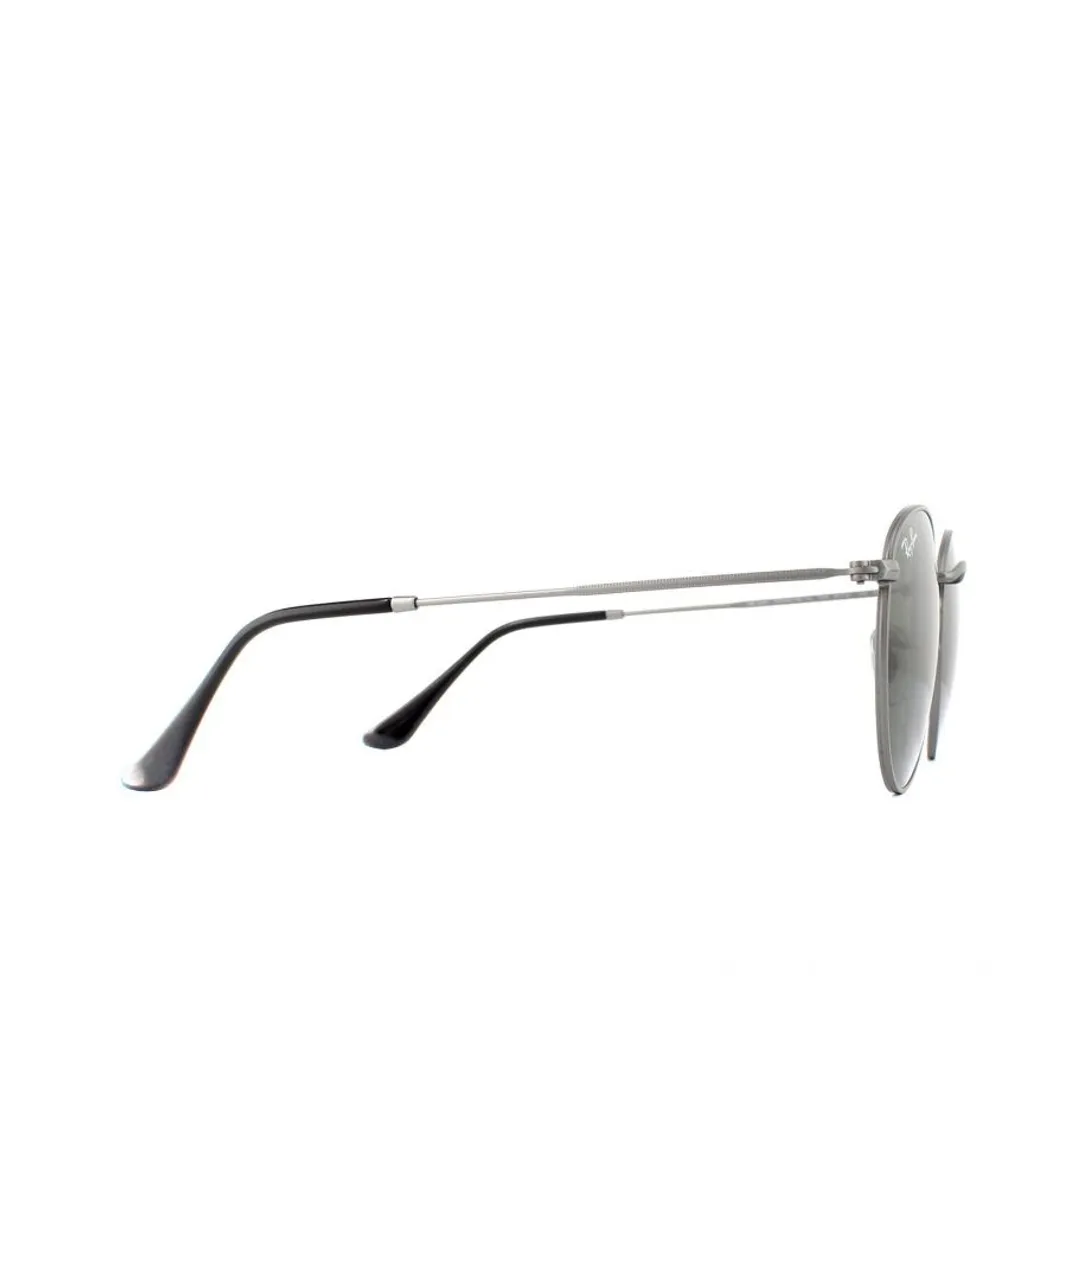 Ray-Ban Unisex Sunglasses Round Metal 3447 029 Gunmetal Green 50 - Grey - One